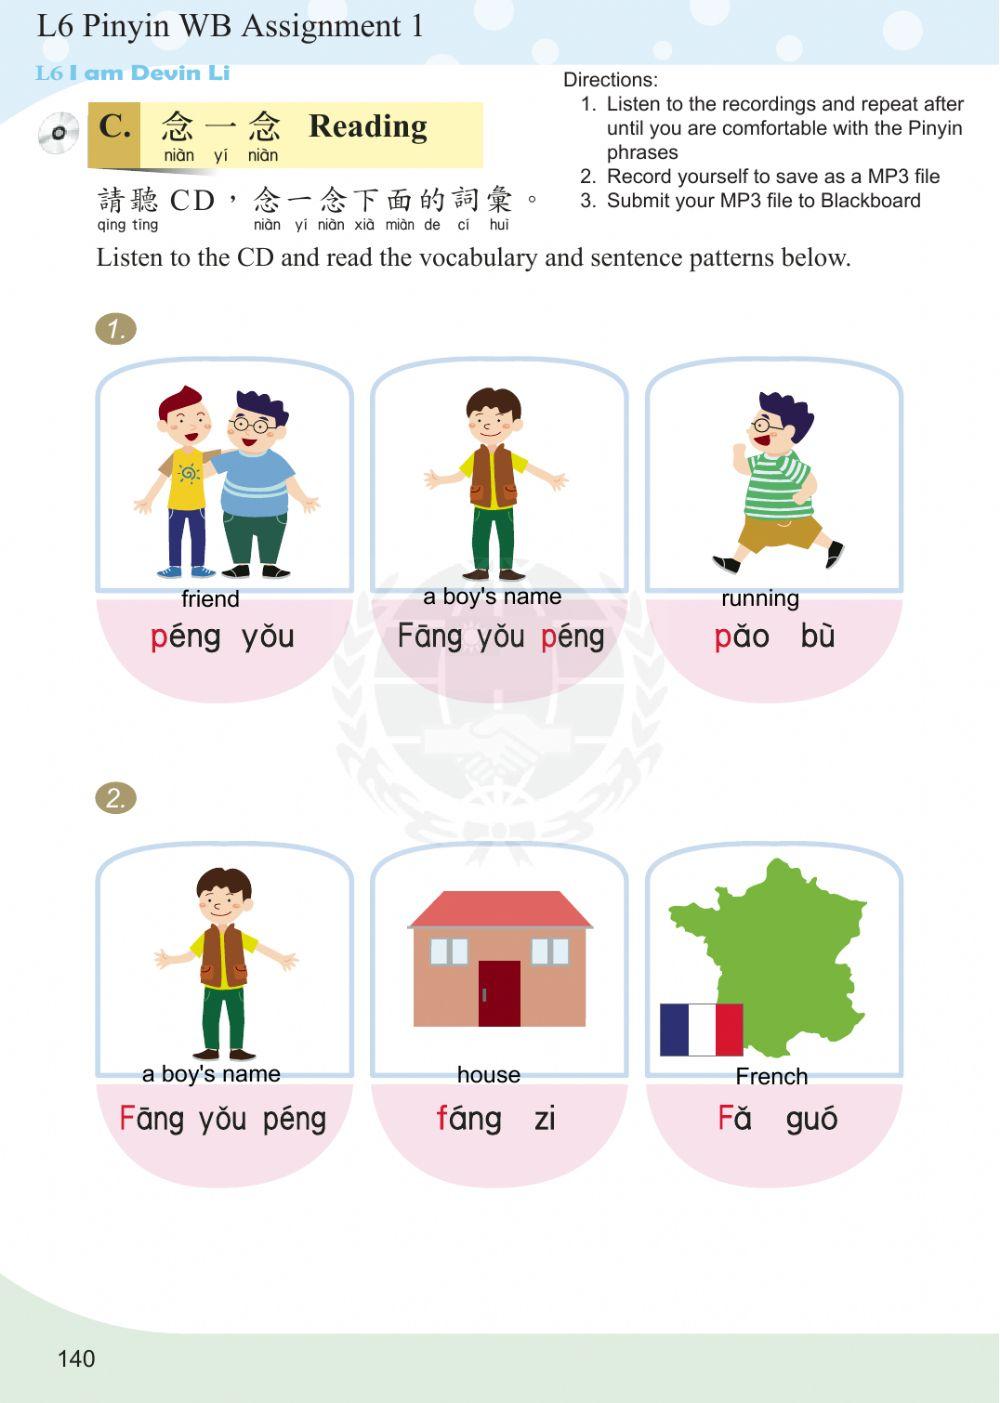 L6 Pinyin WB Assignment 1